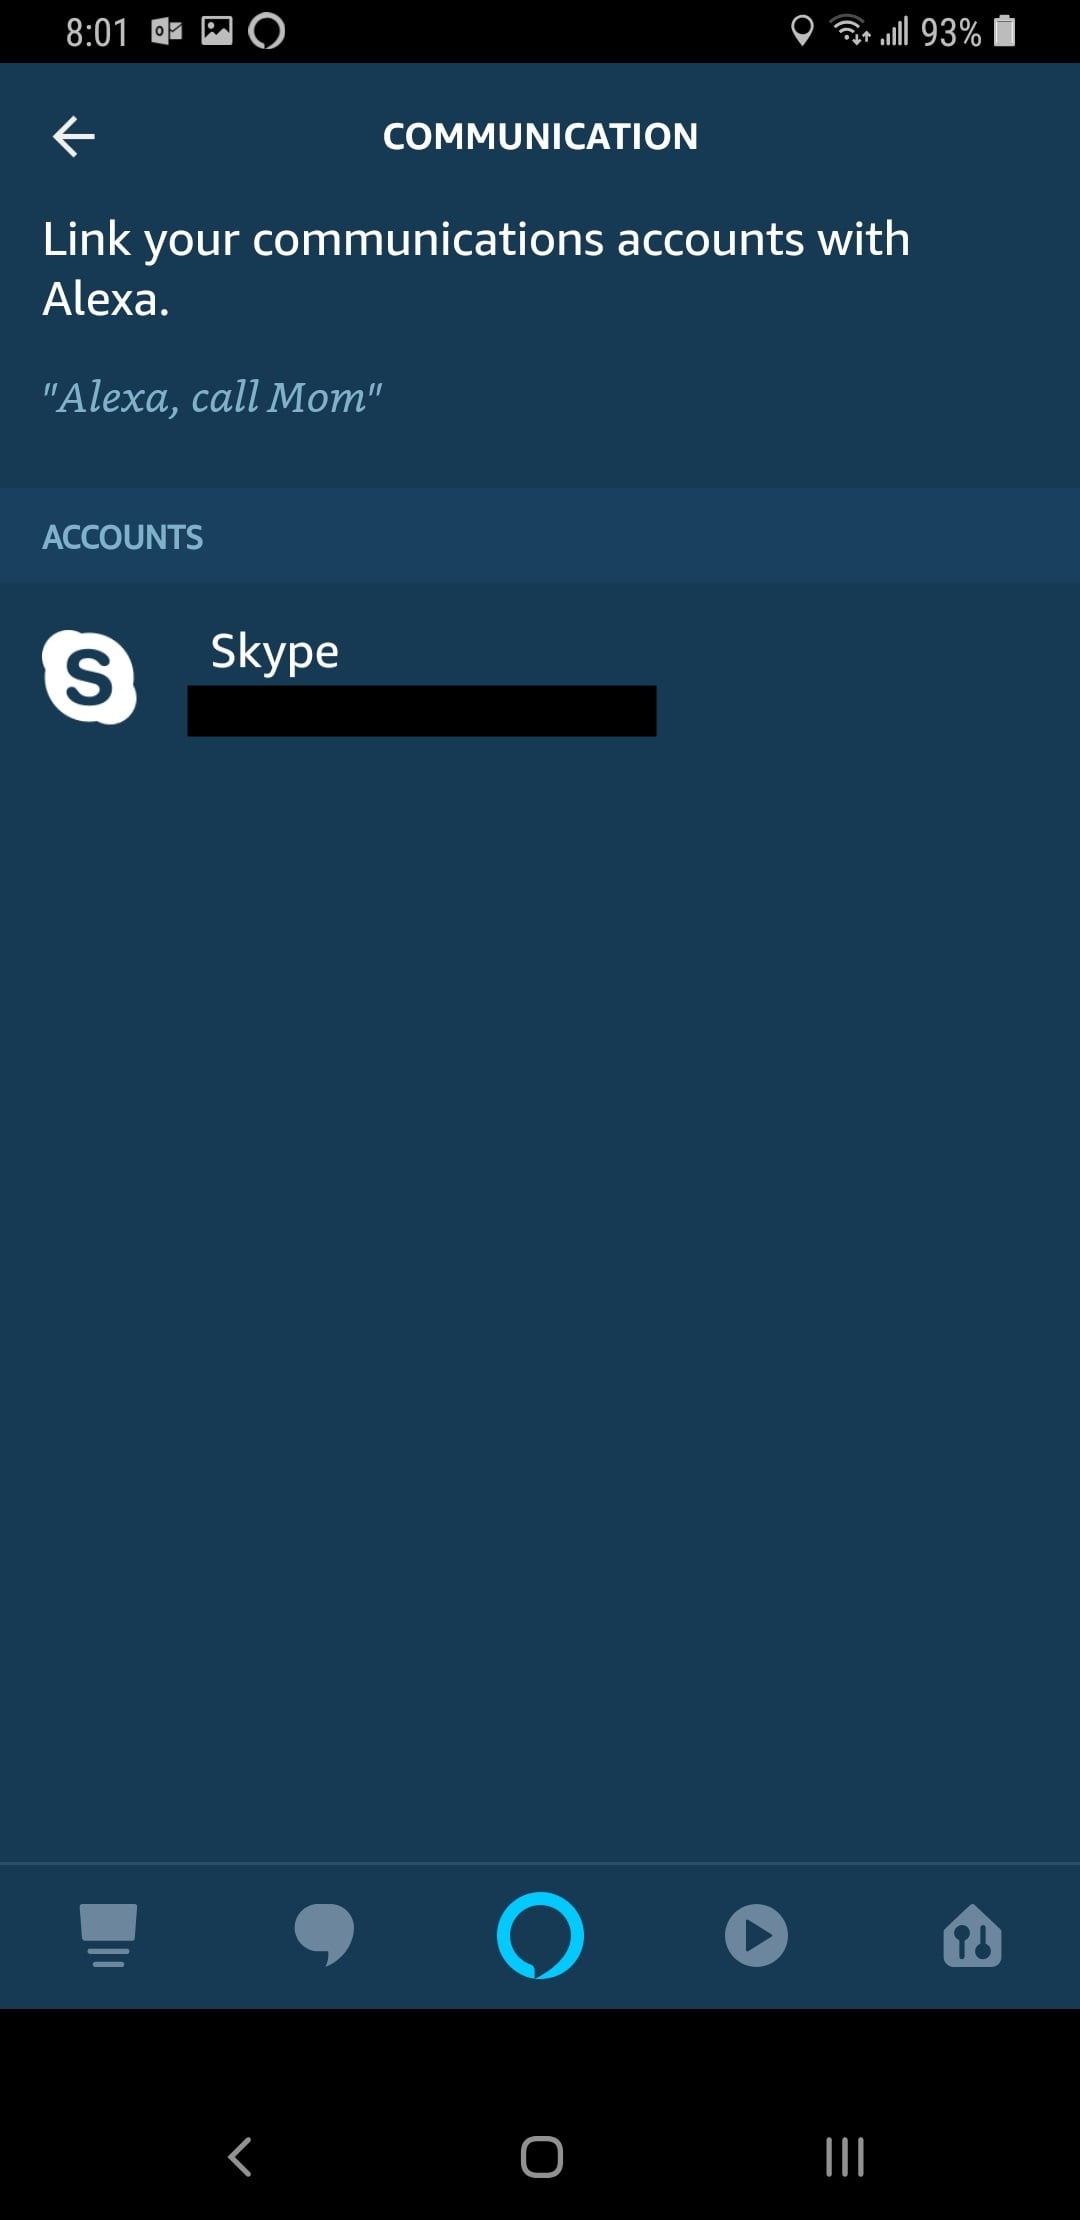 Skype Calling on Alexa Devices